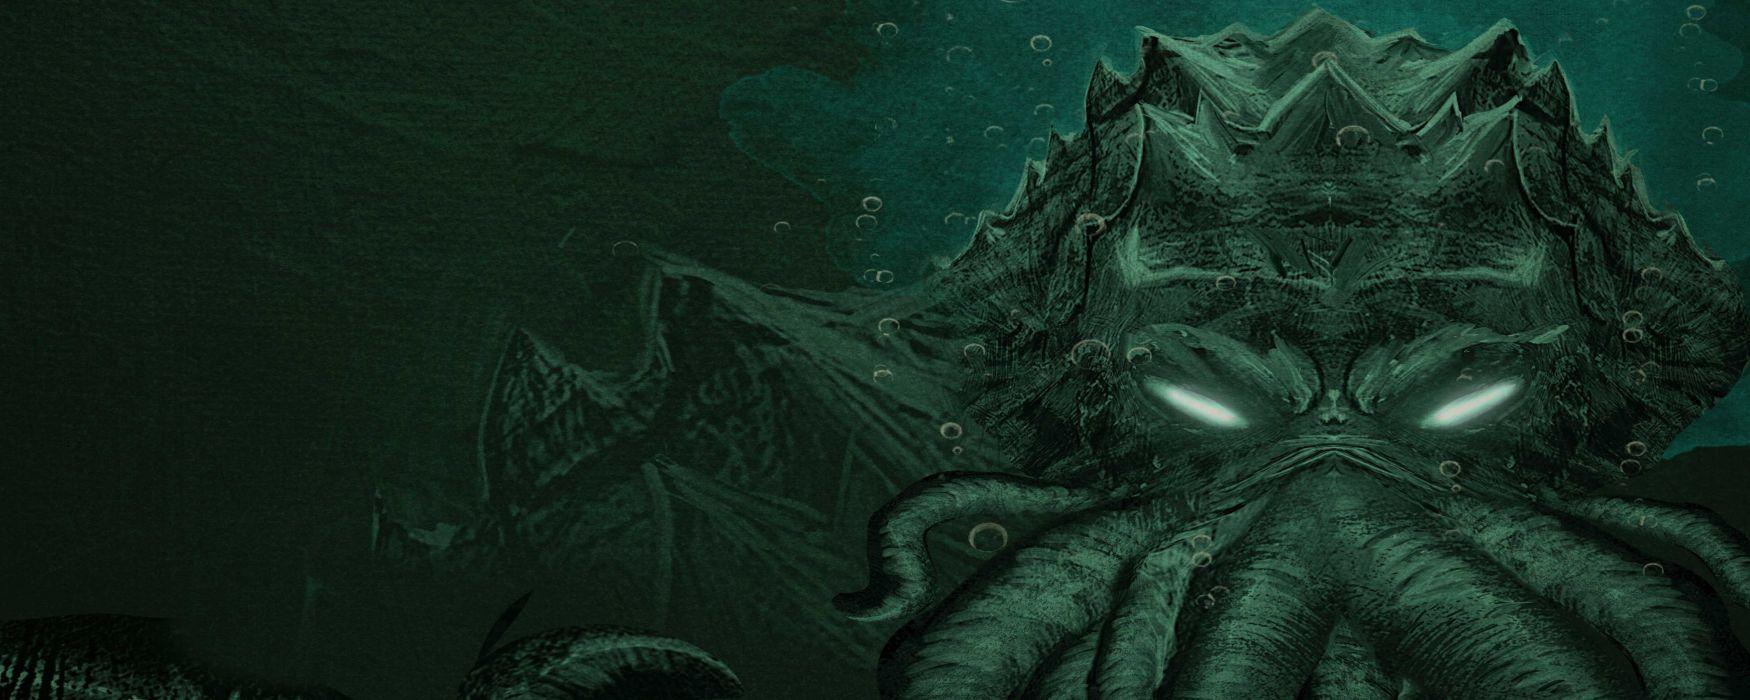 Fantasy art artwork monster creature octopus Cthulhu wallpaper